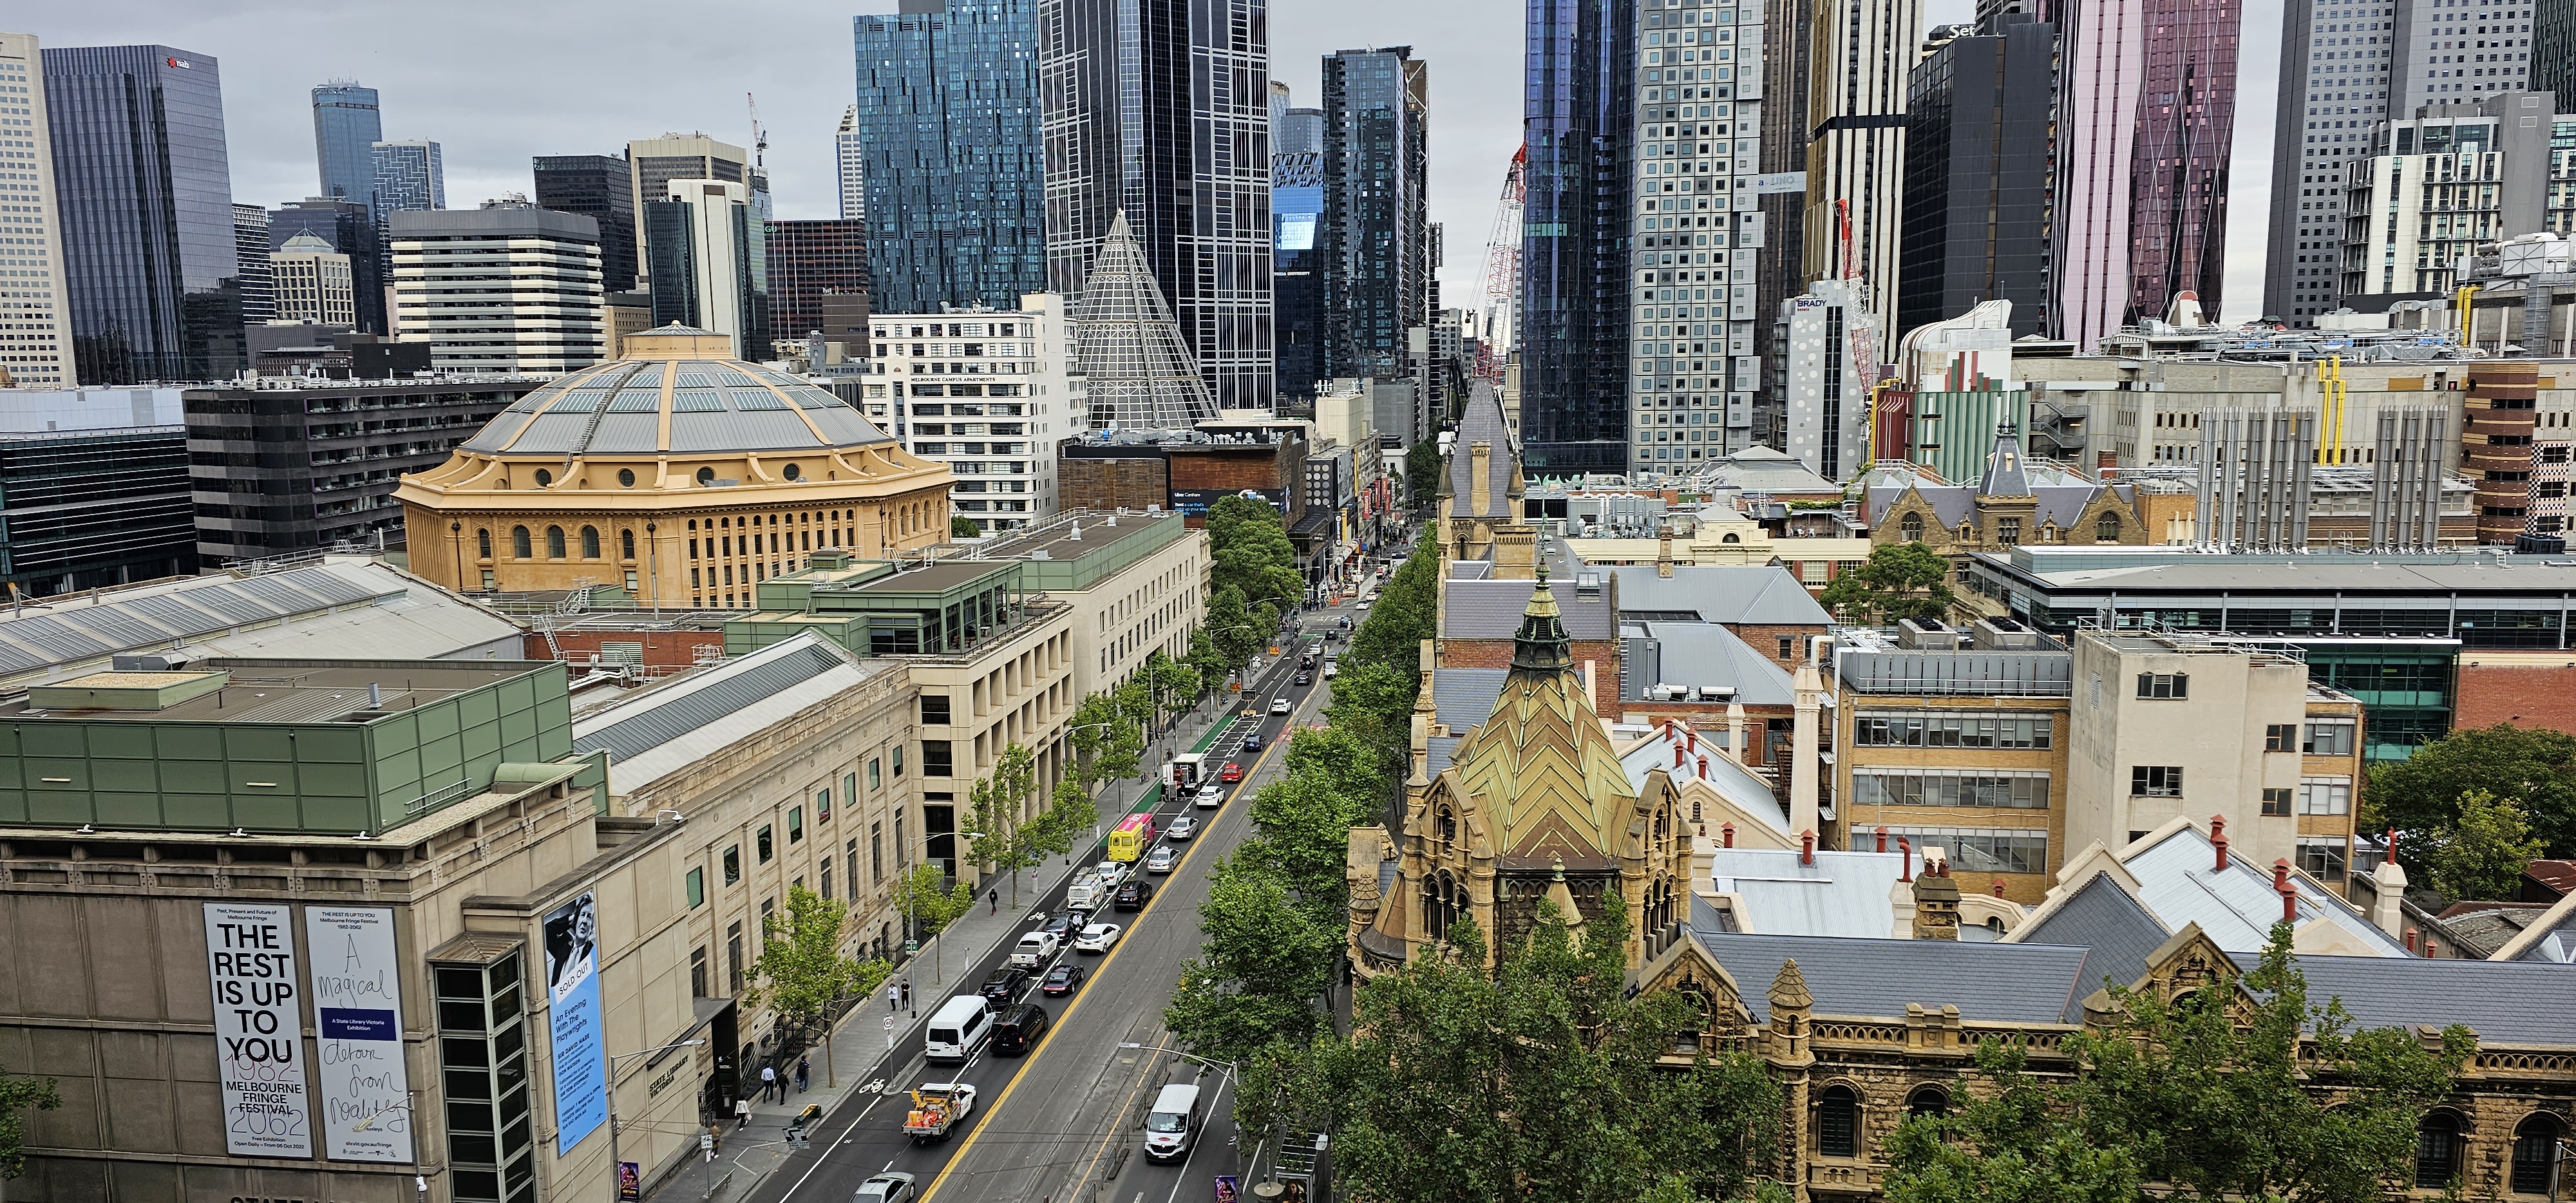 City skyline of Melbourne